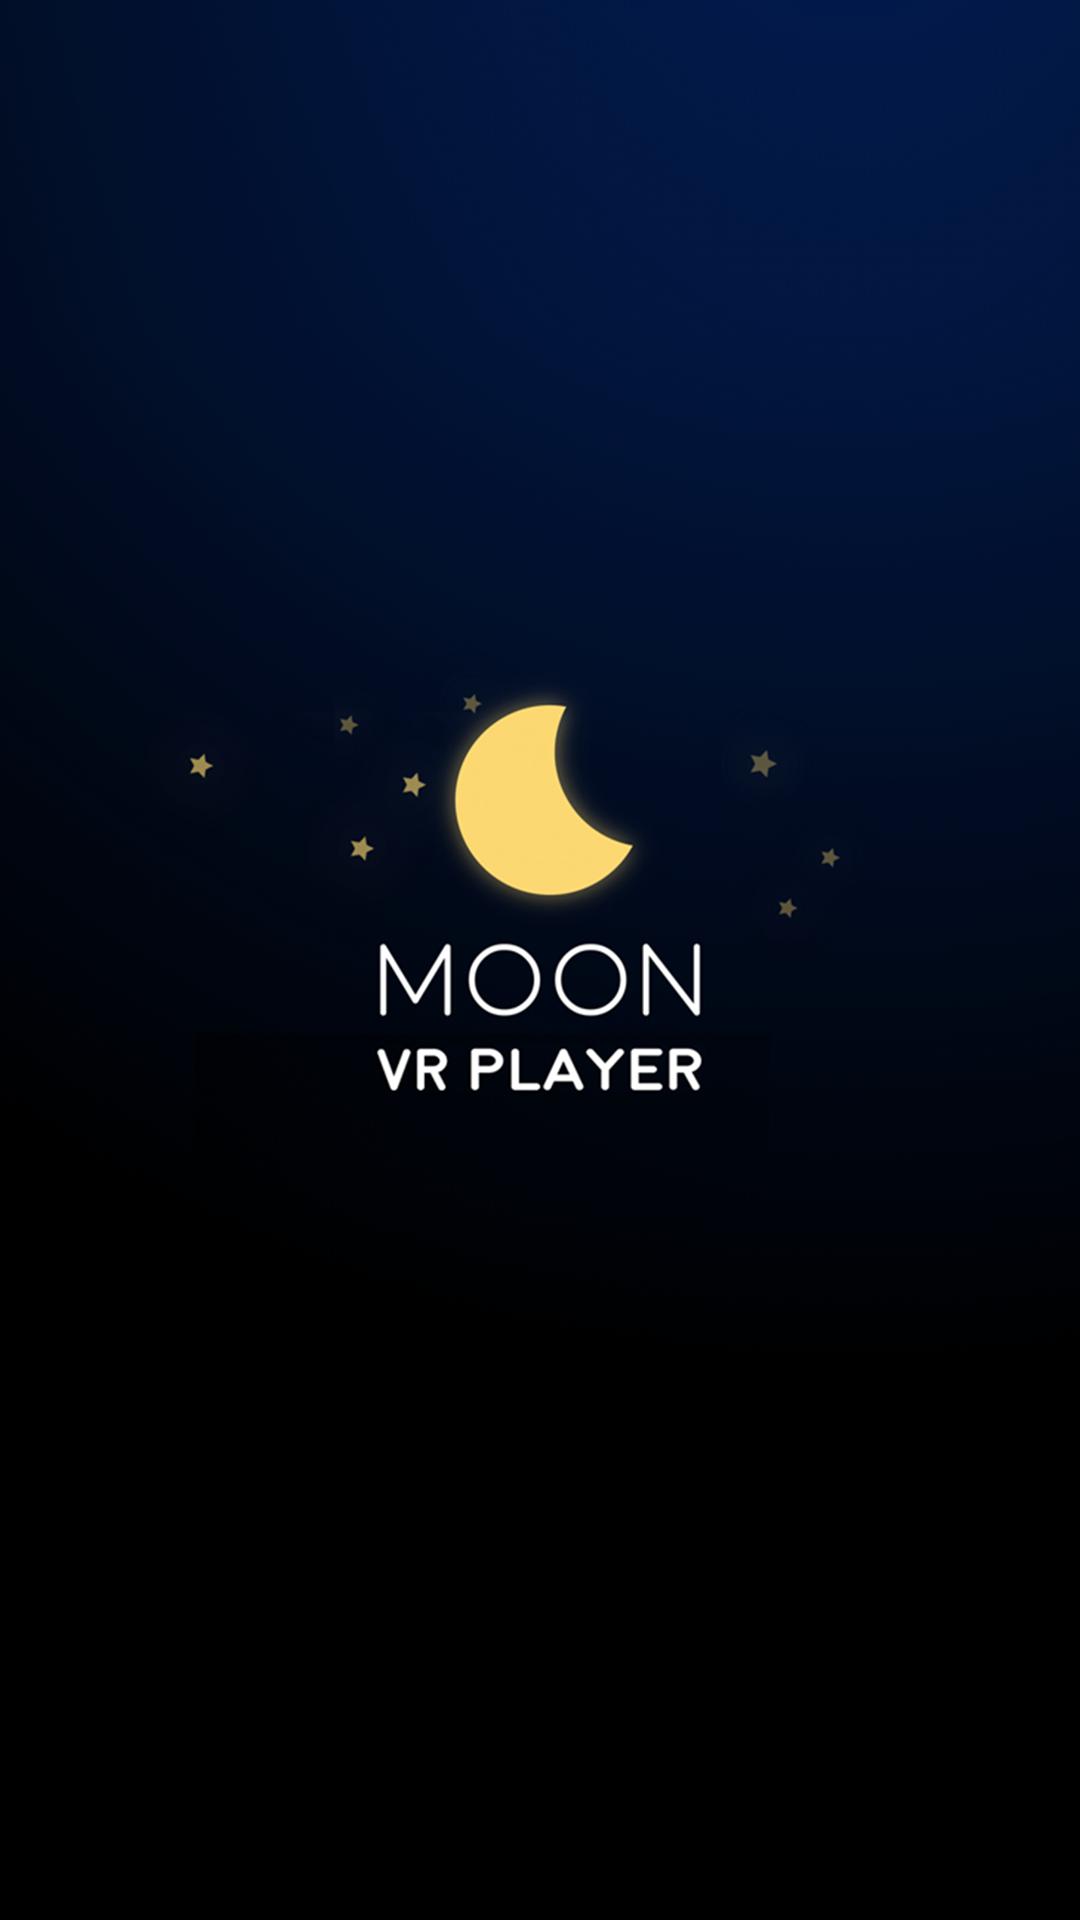 Moon VR Player 무료 만능VR 프레이어